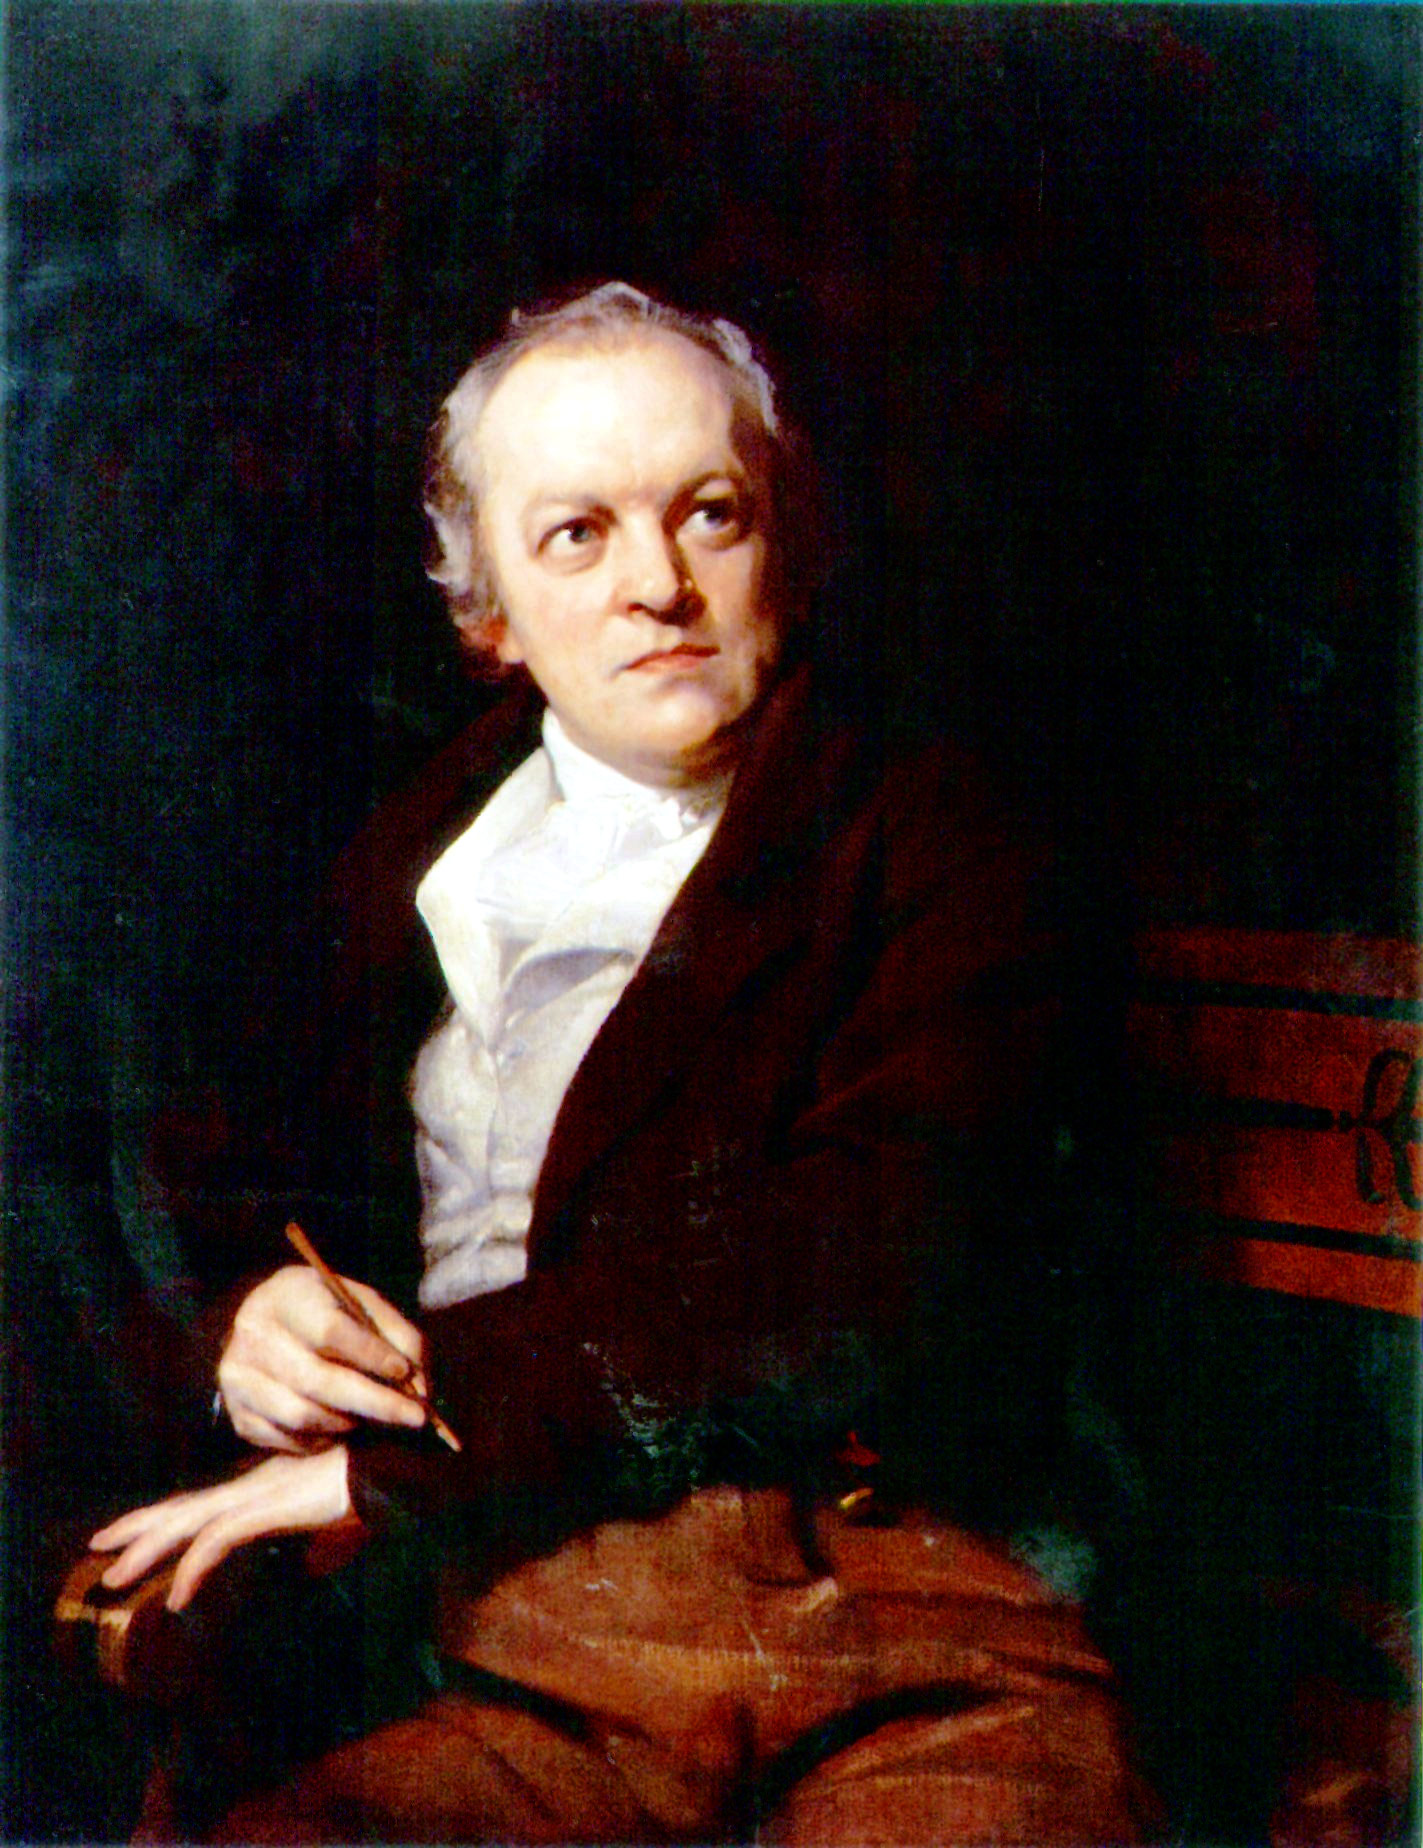 William Blake portrait by Thomas Phillips